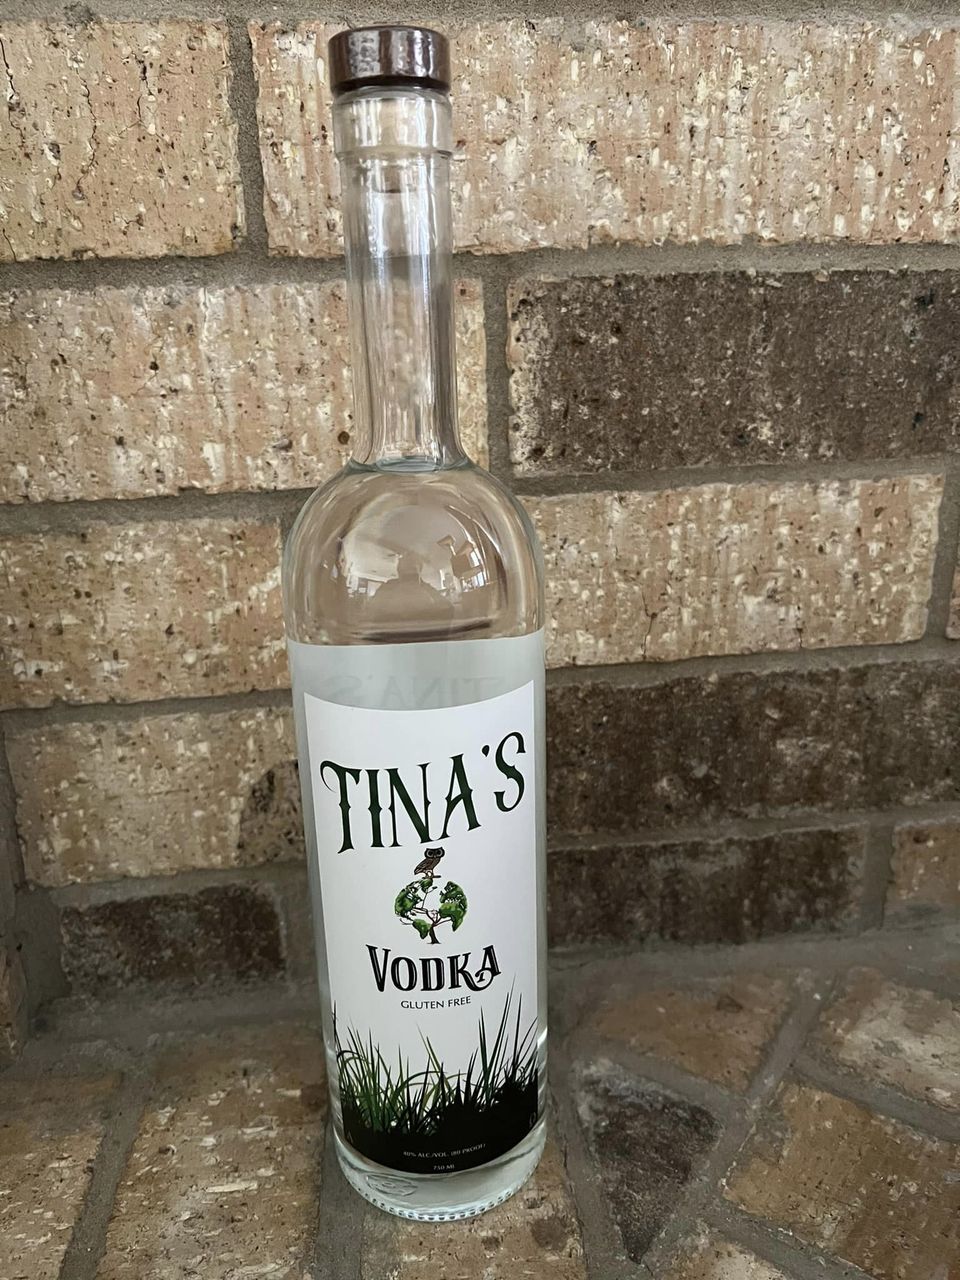 Yummy Tina’s Vodka